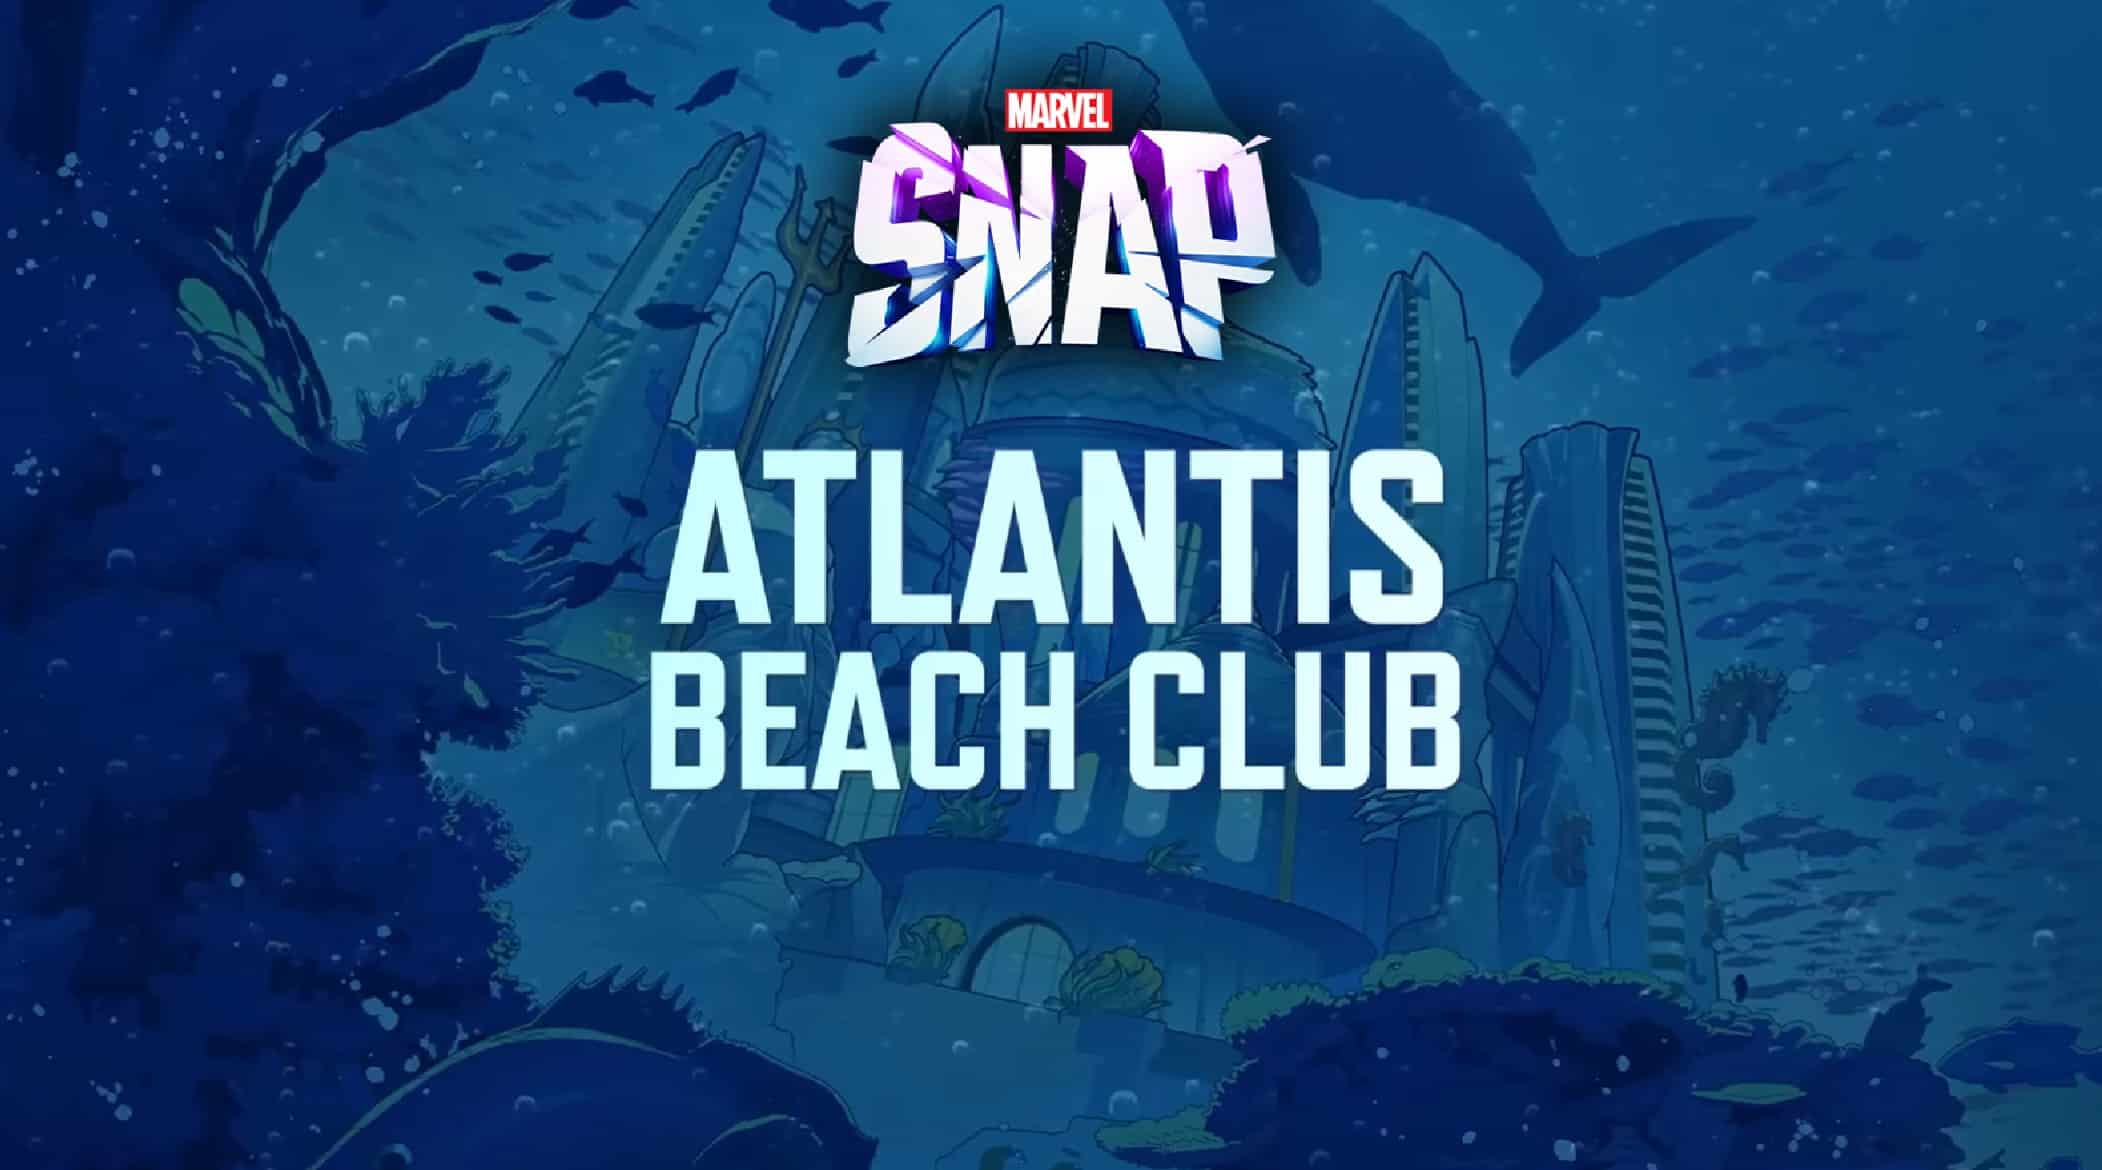 Marvel Snap Atlantis Beach Club-ის ნამუშევრები